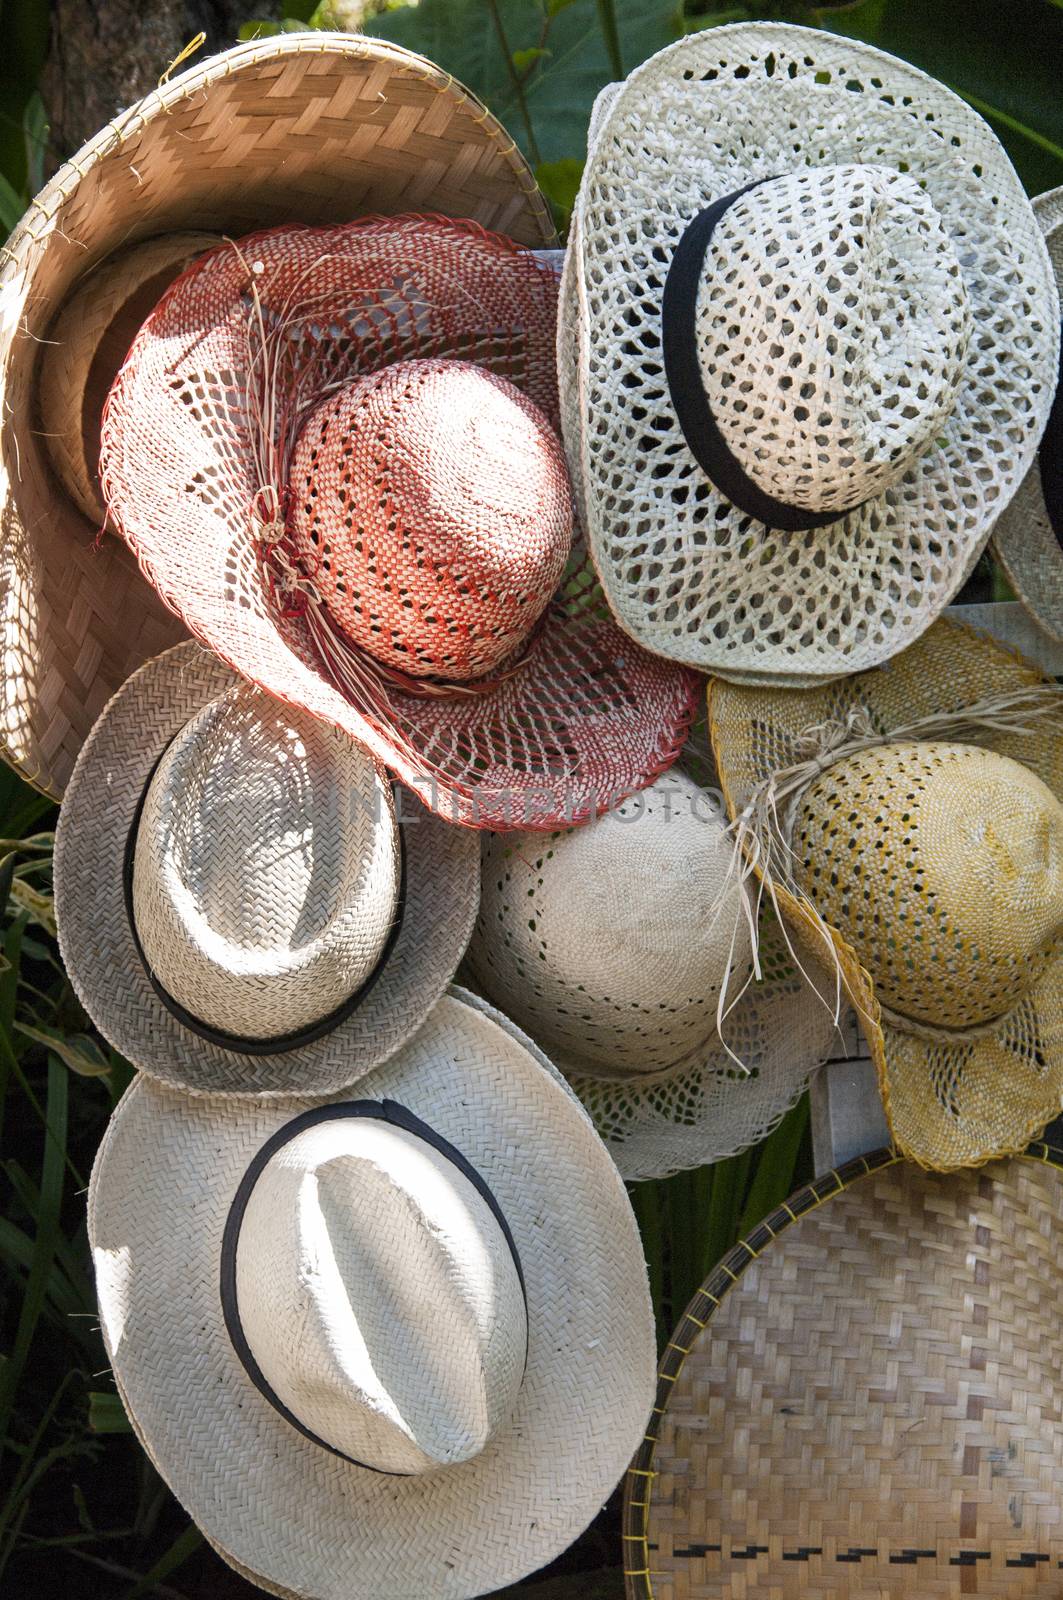 Some sun hats for holidays, Indonesia Bali Ubud